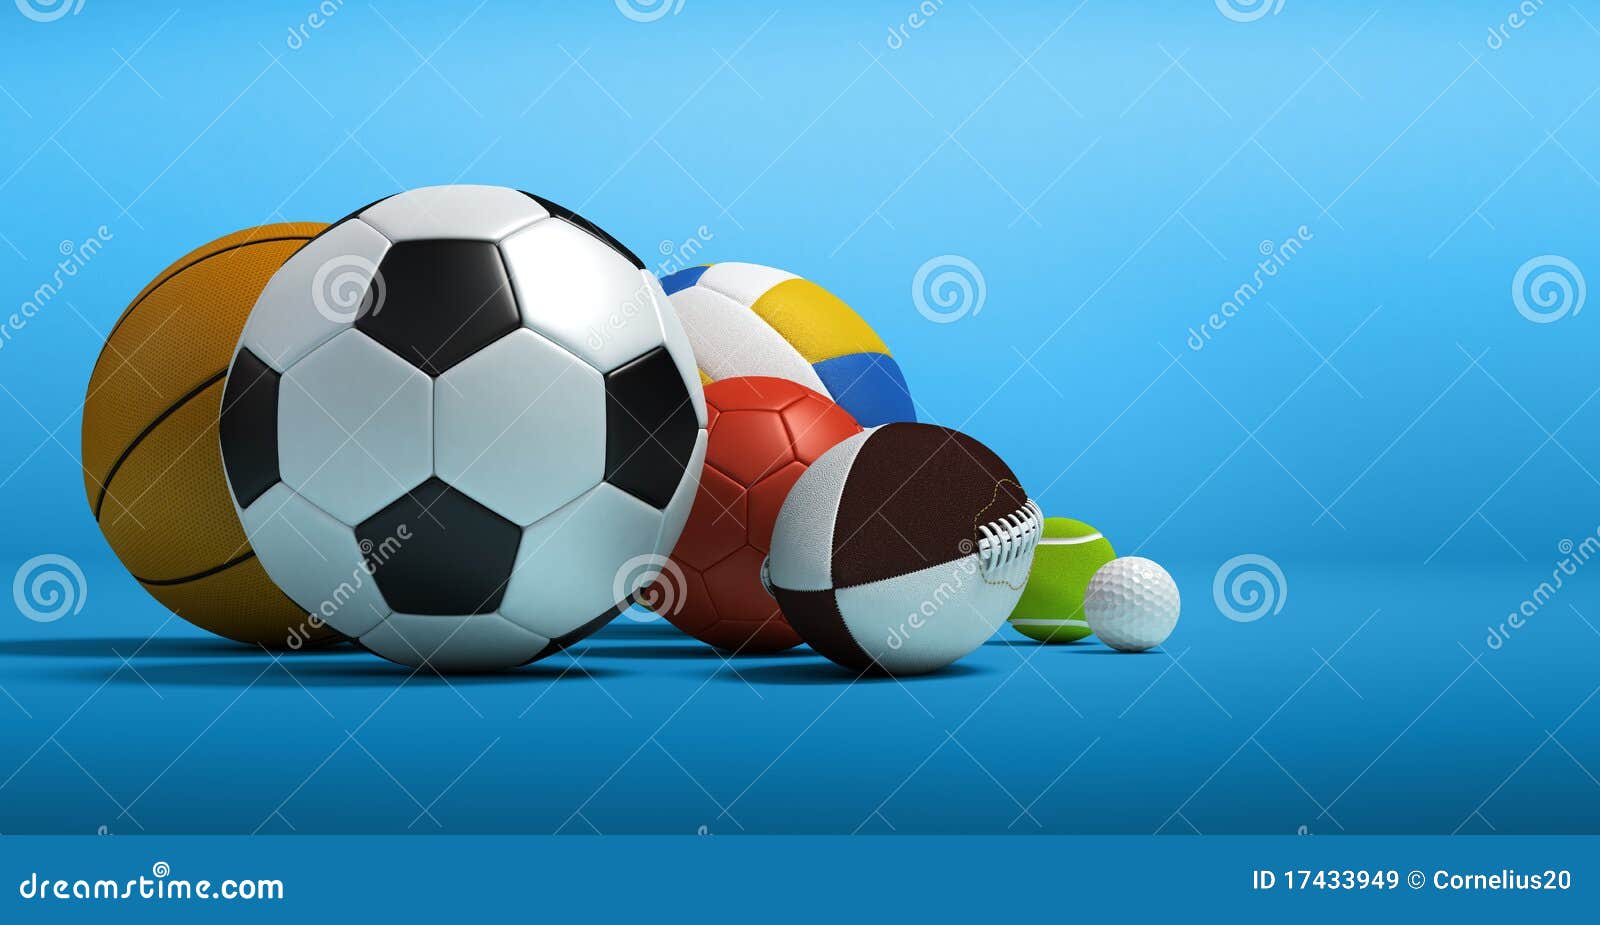 Different sport balls stock illustration. Illustration of activity